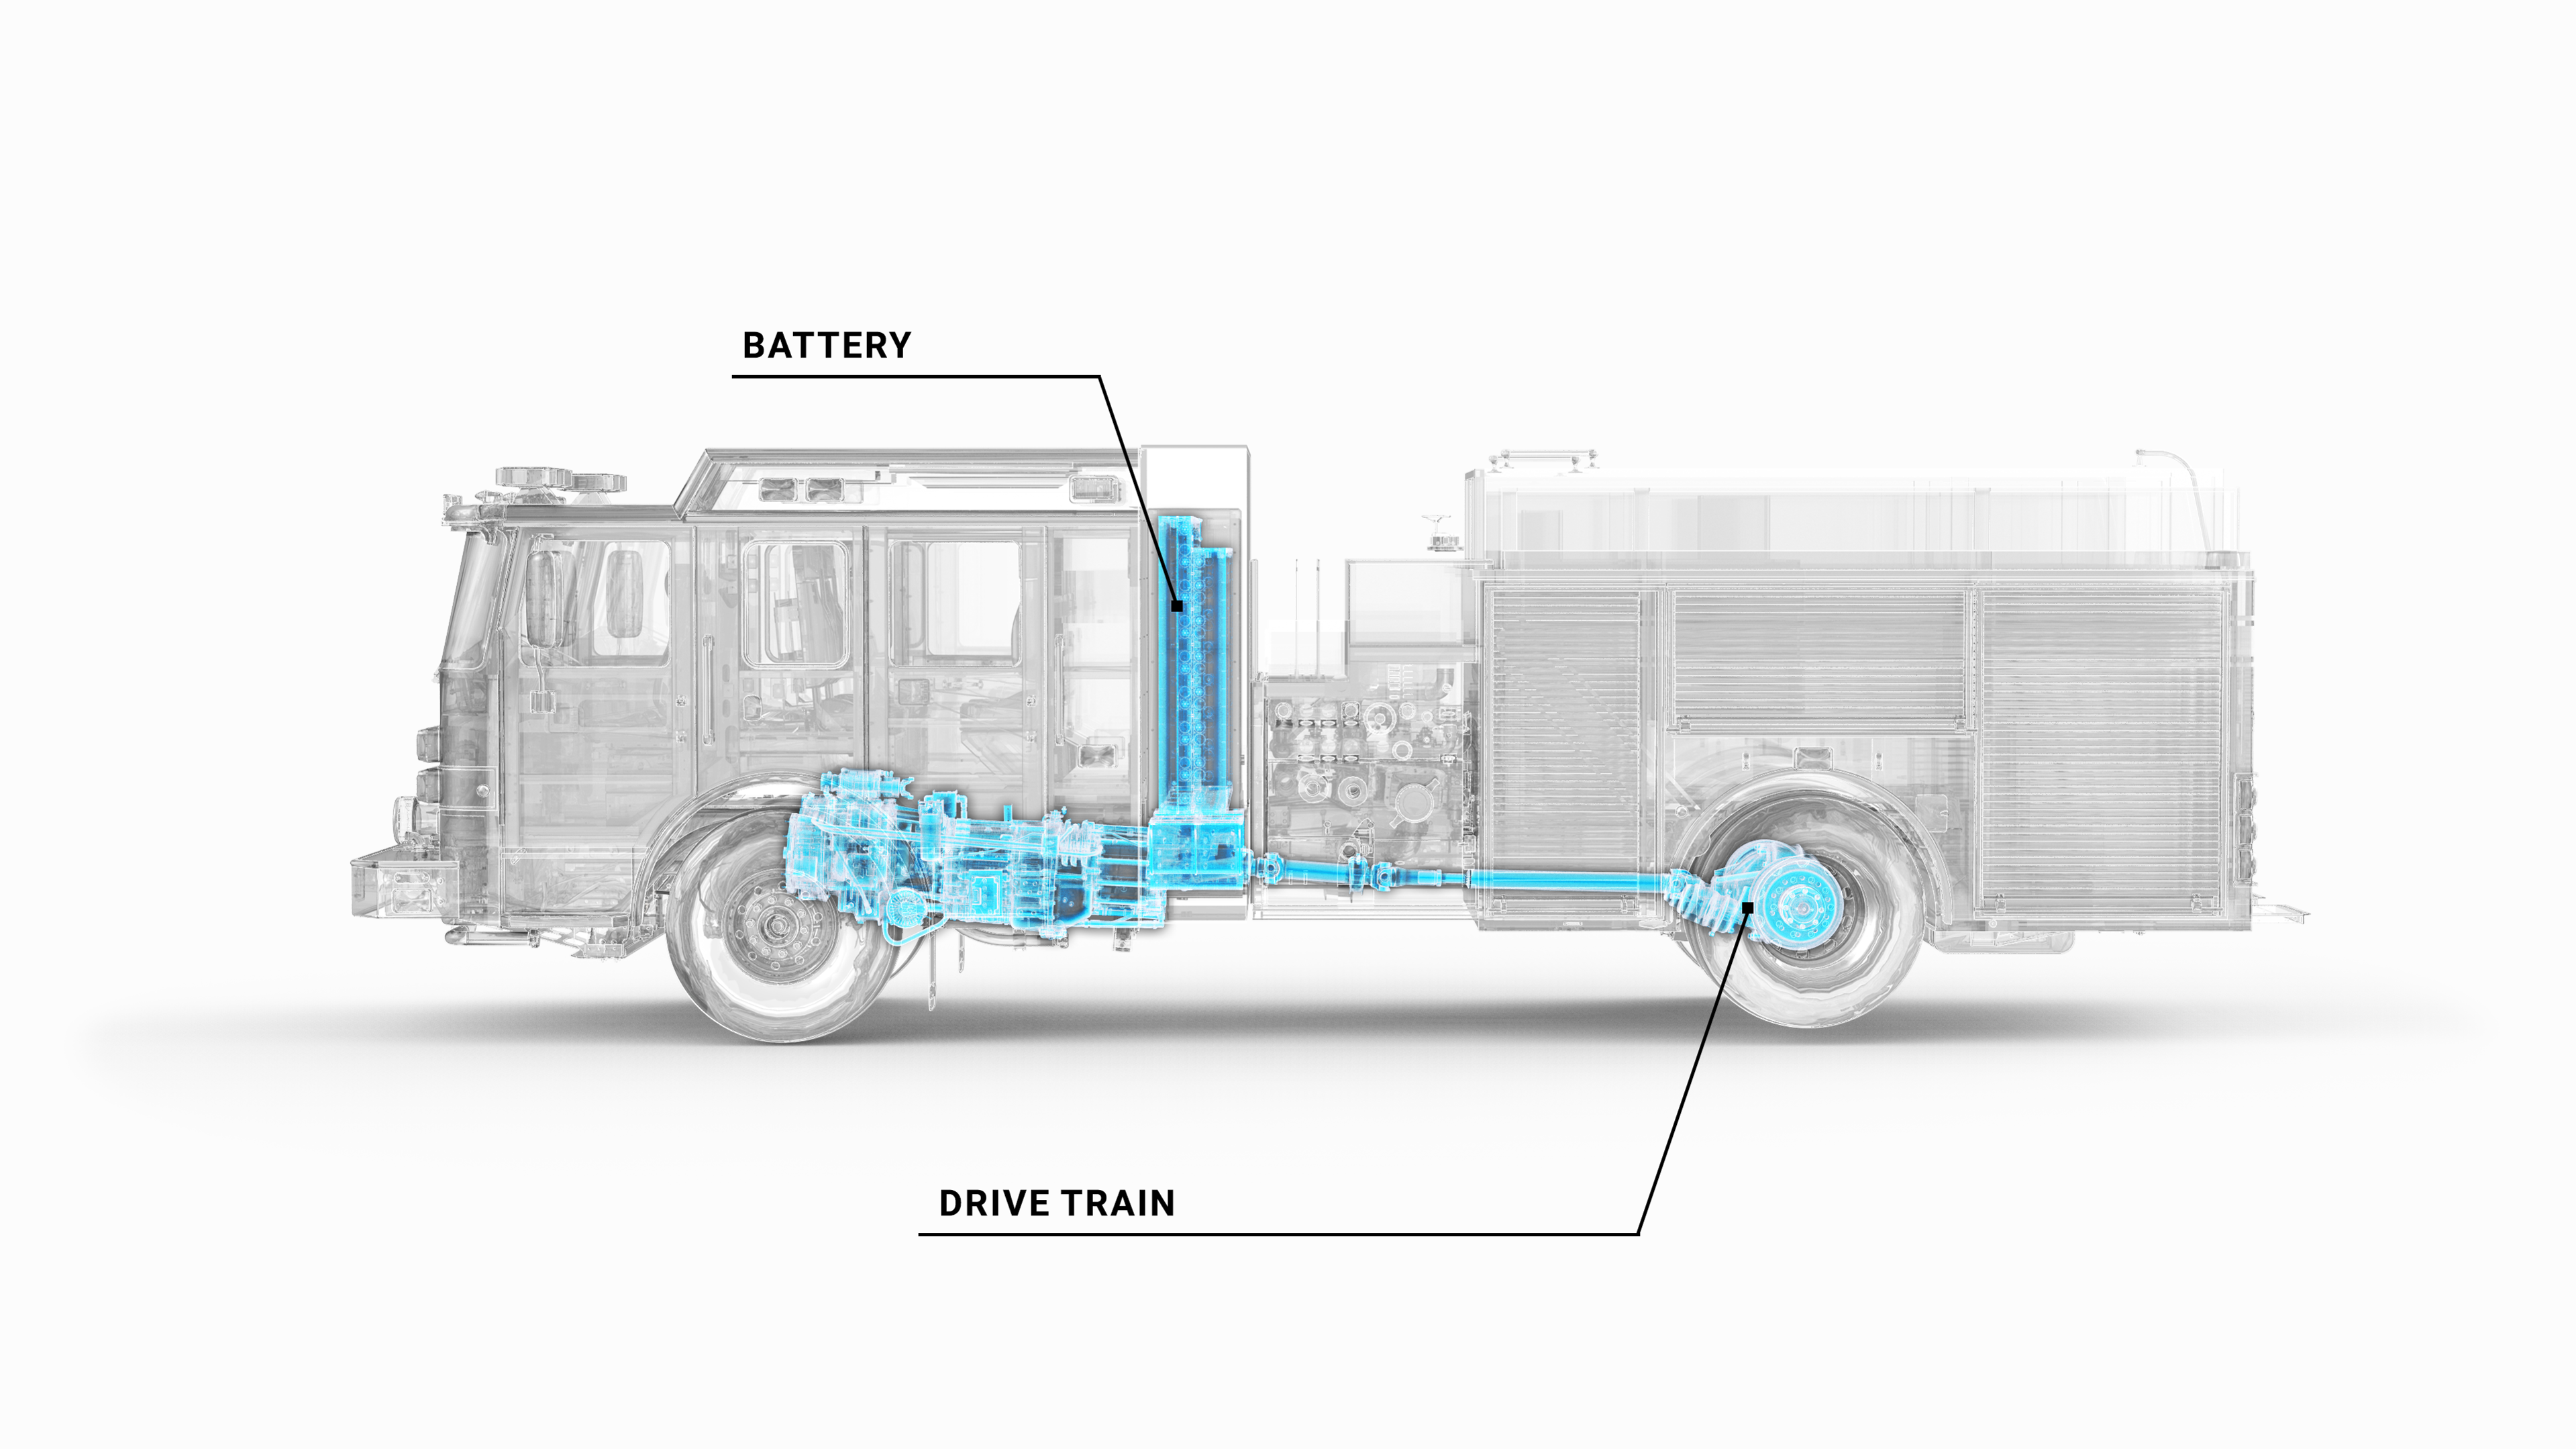 Volvo FMX Crew Cab Fire Truck 2020 3D model